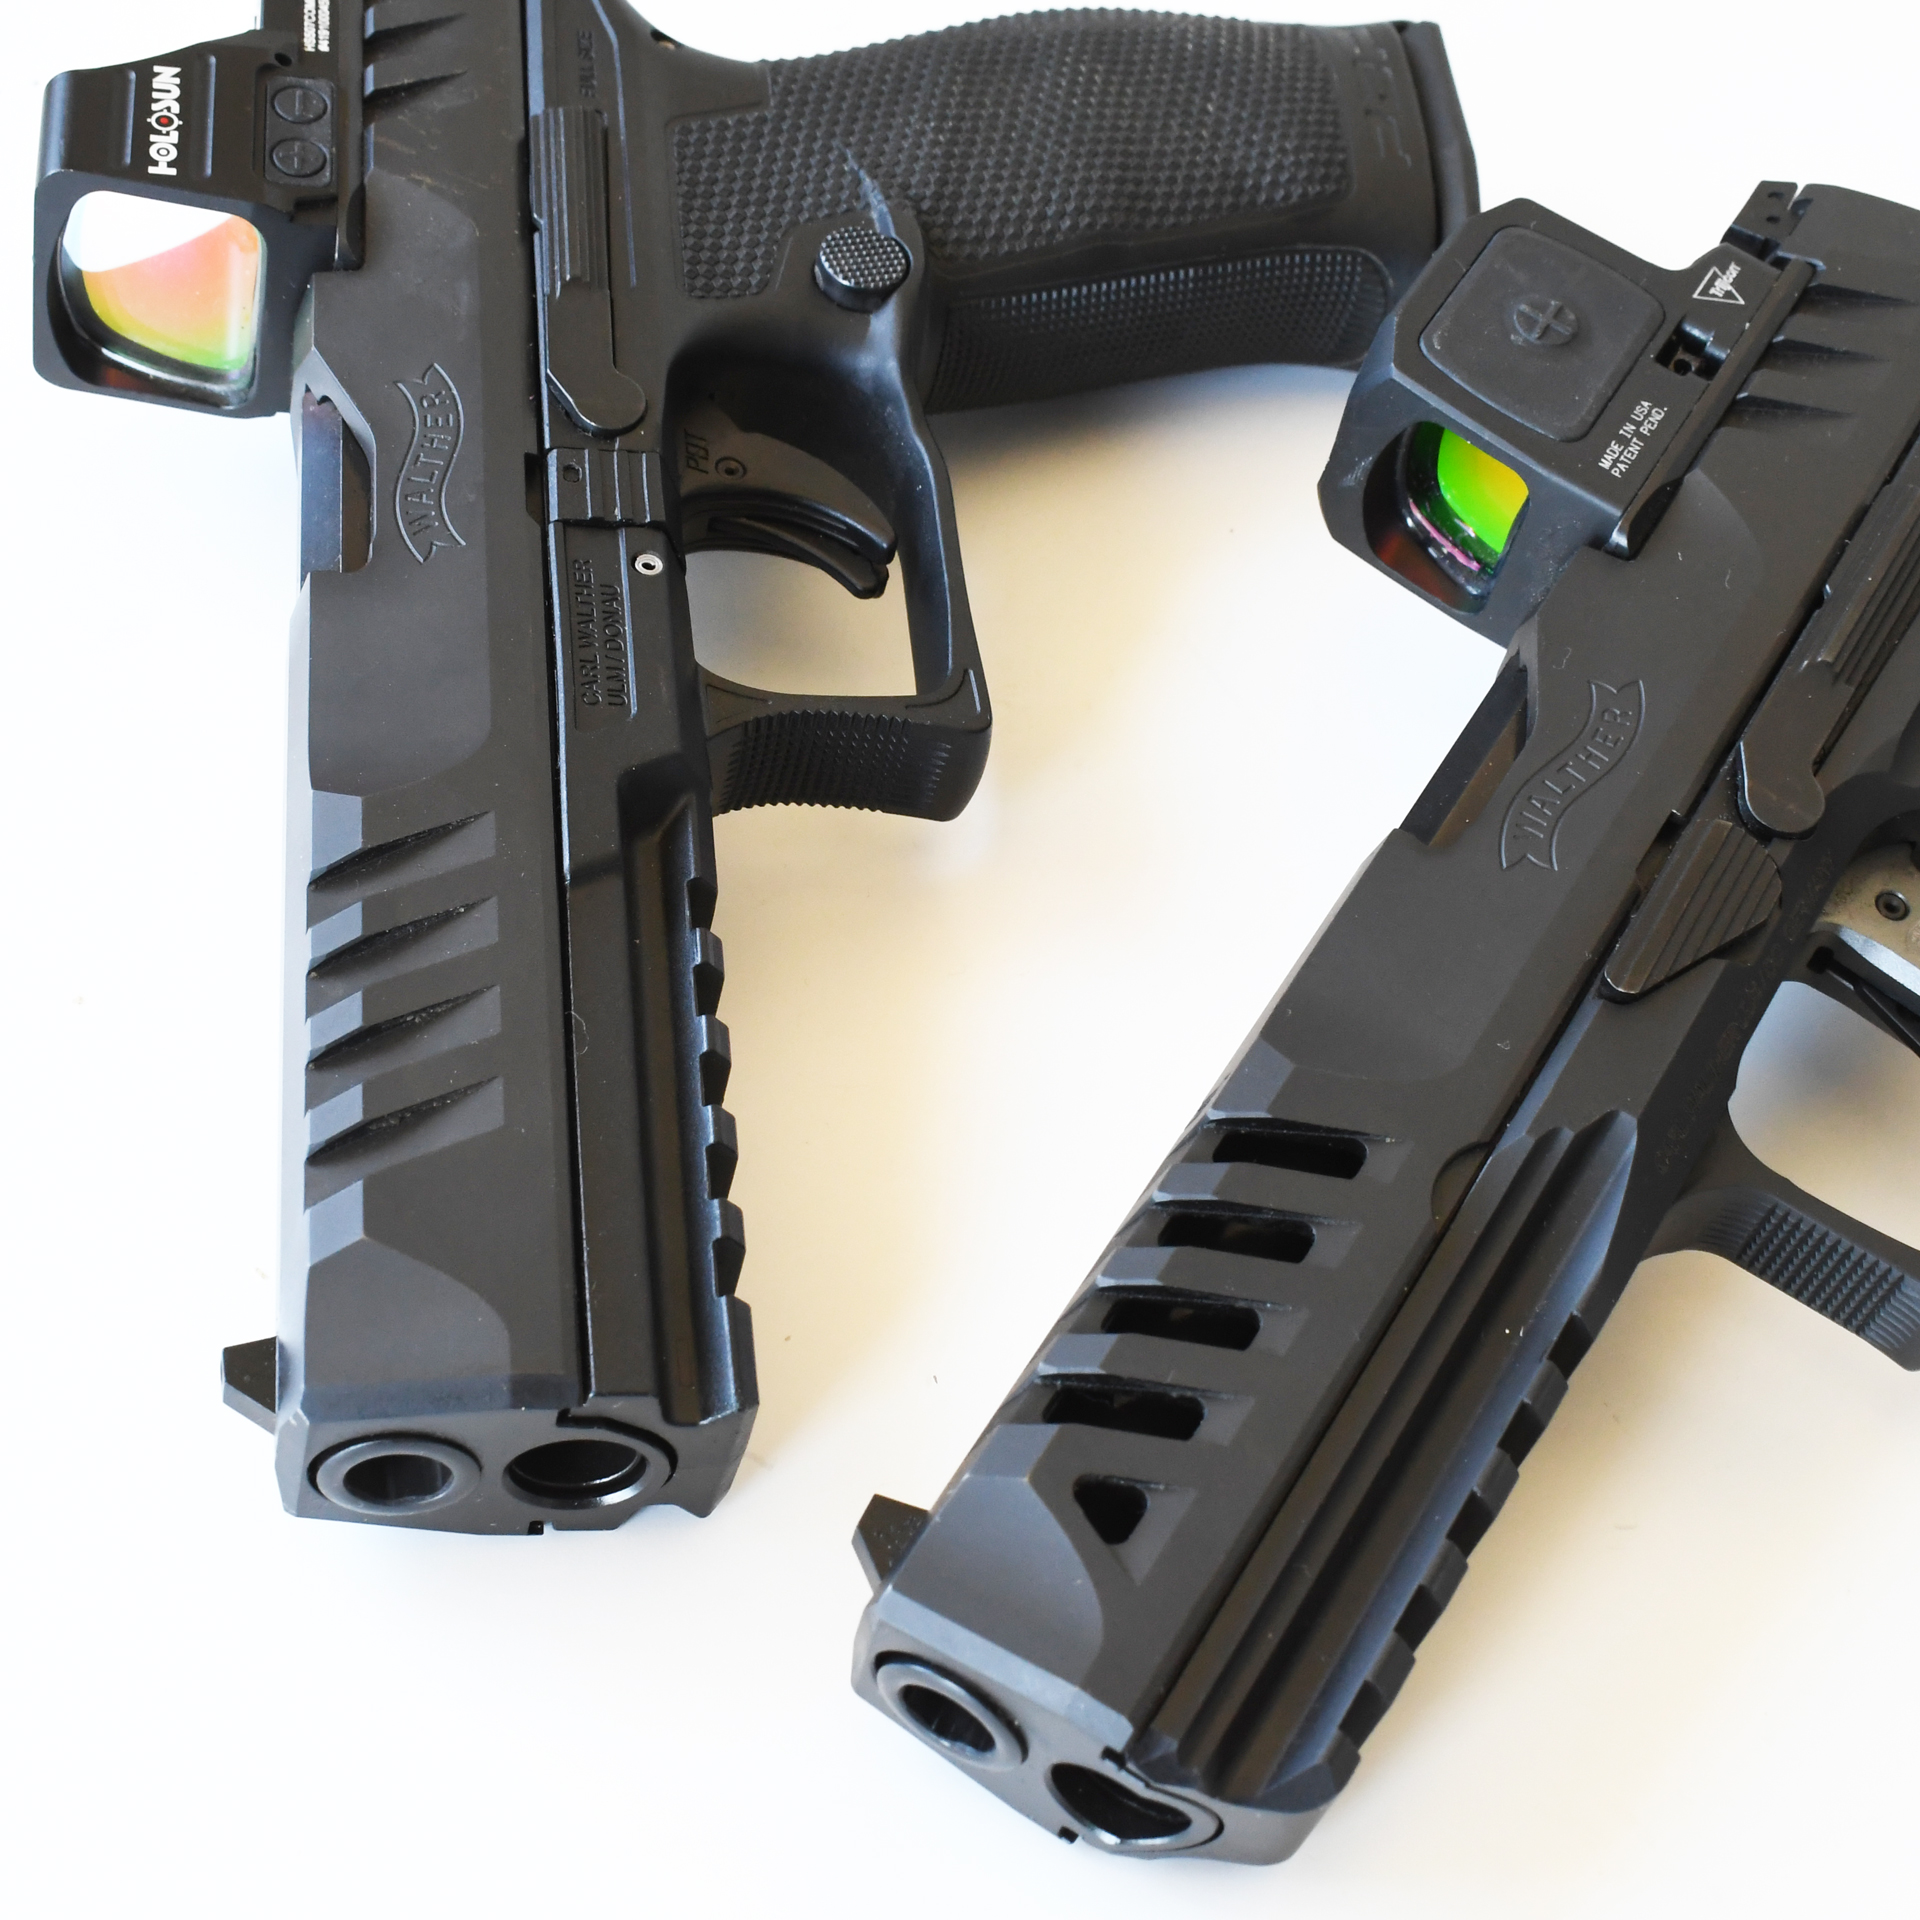 Walther PDP left-side muzzle slide pistol comparison